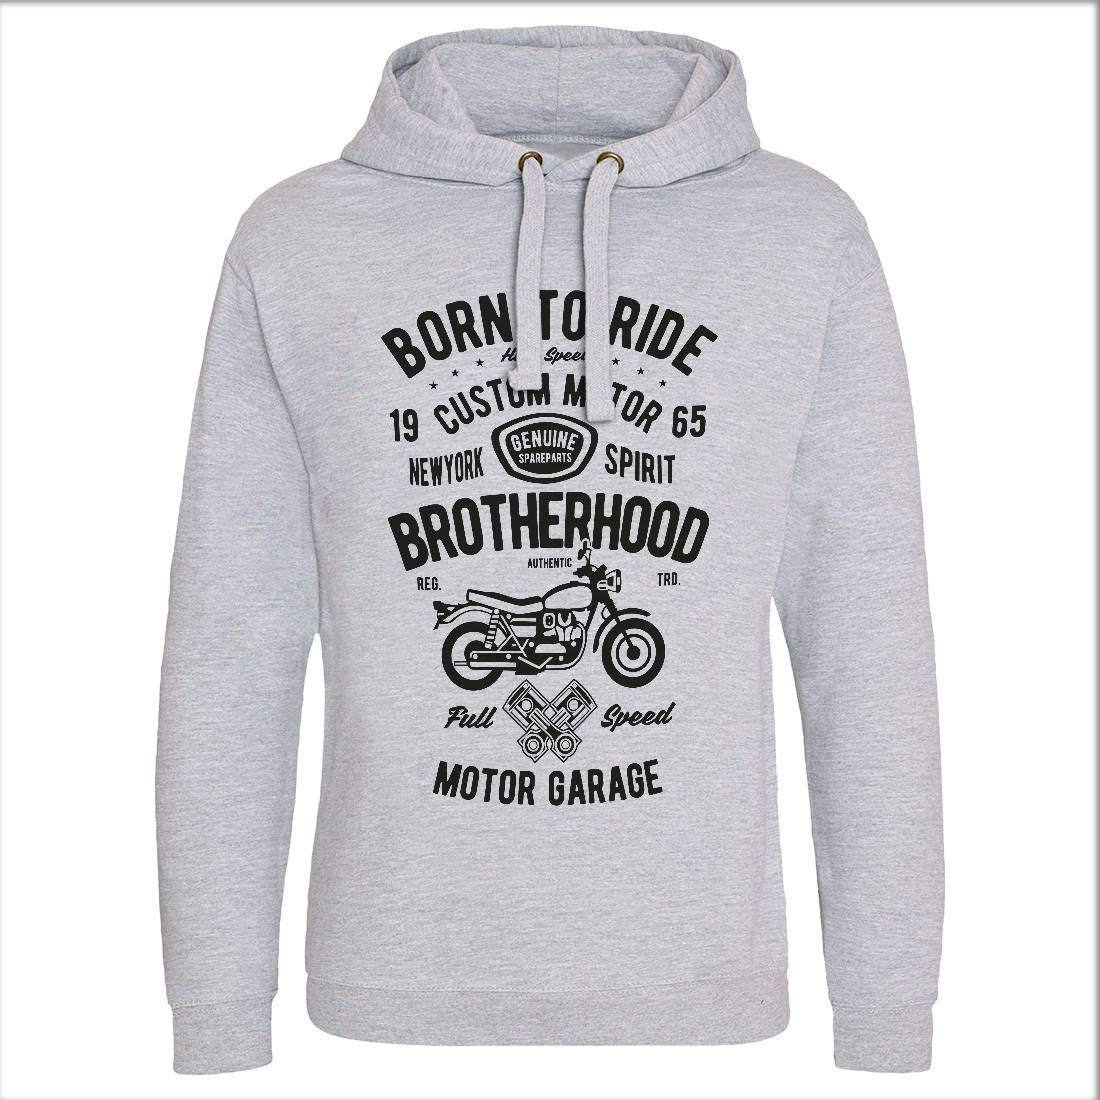 Brotherhood Mens Hoodie Without Pocket Motorcycles B423